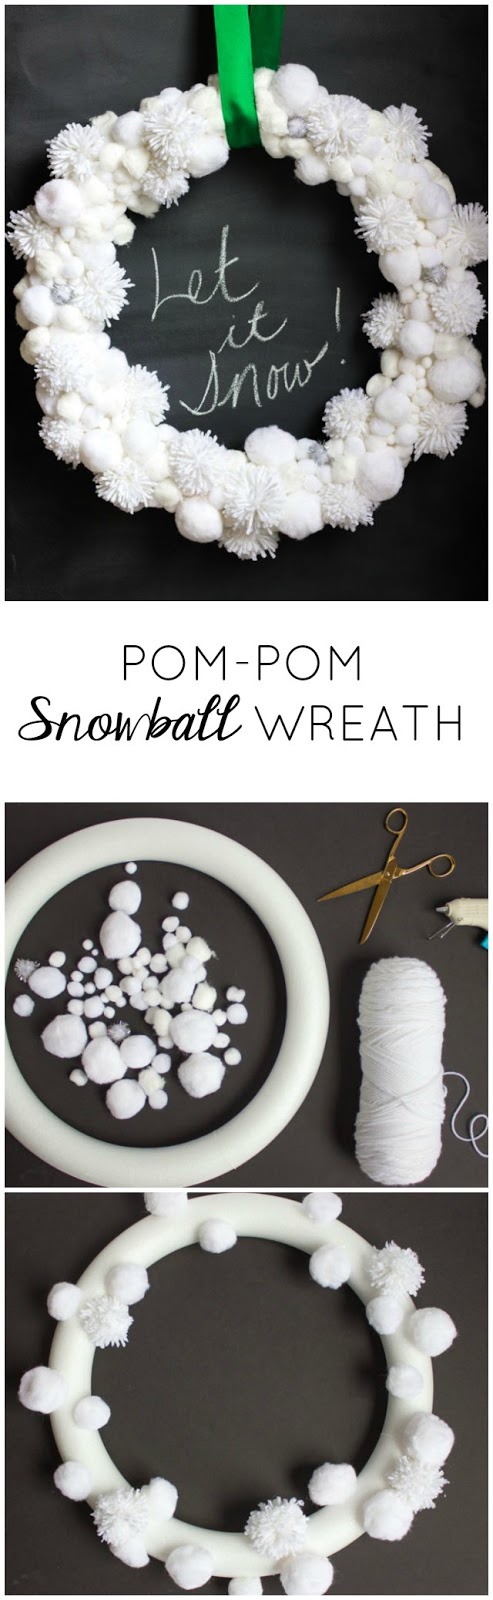 Make this pretty Christmas snowball wreath from white pom-poms!